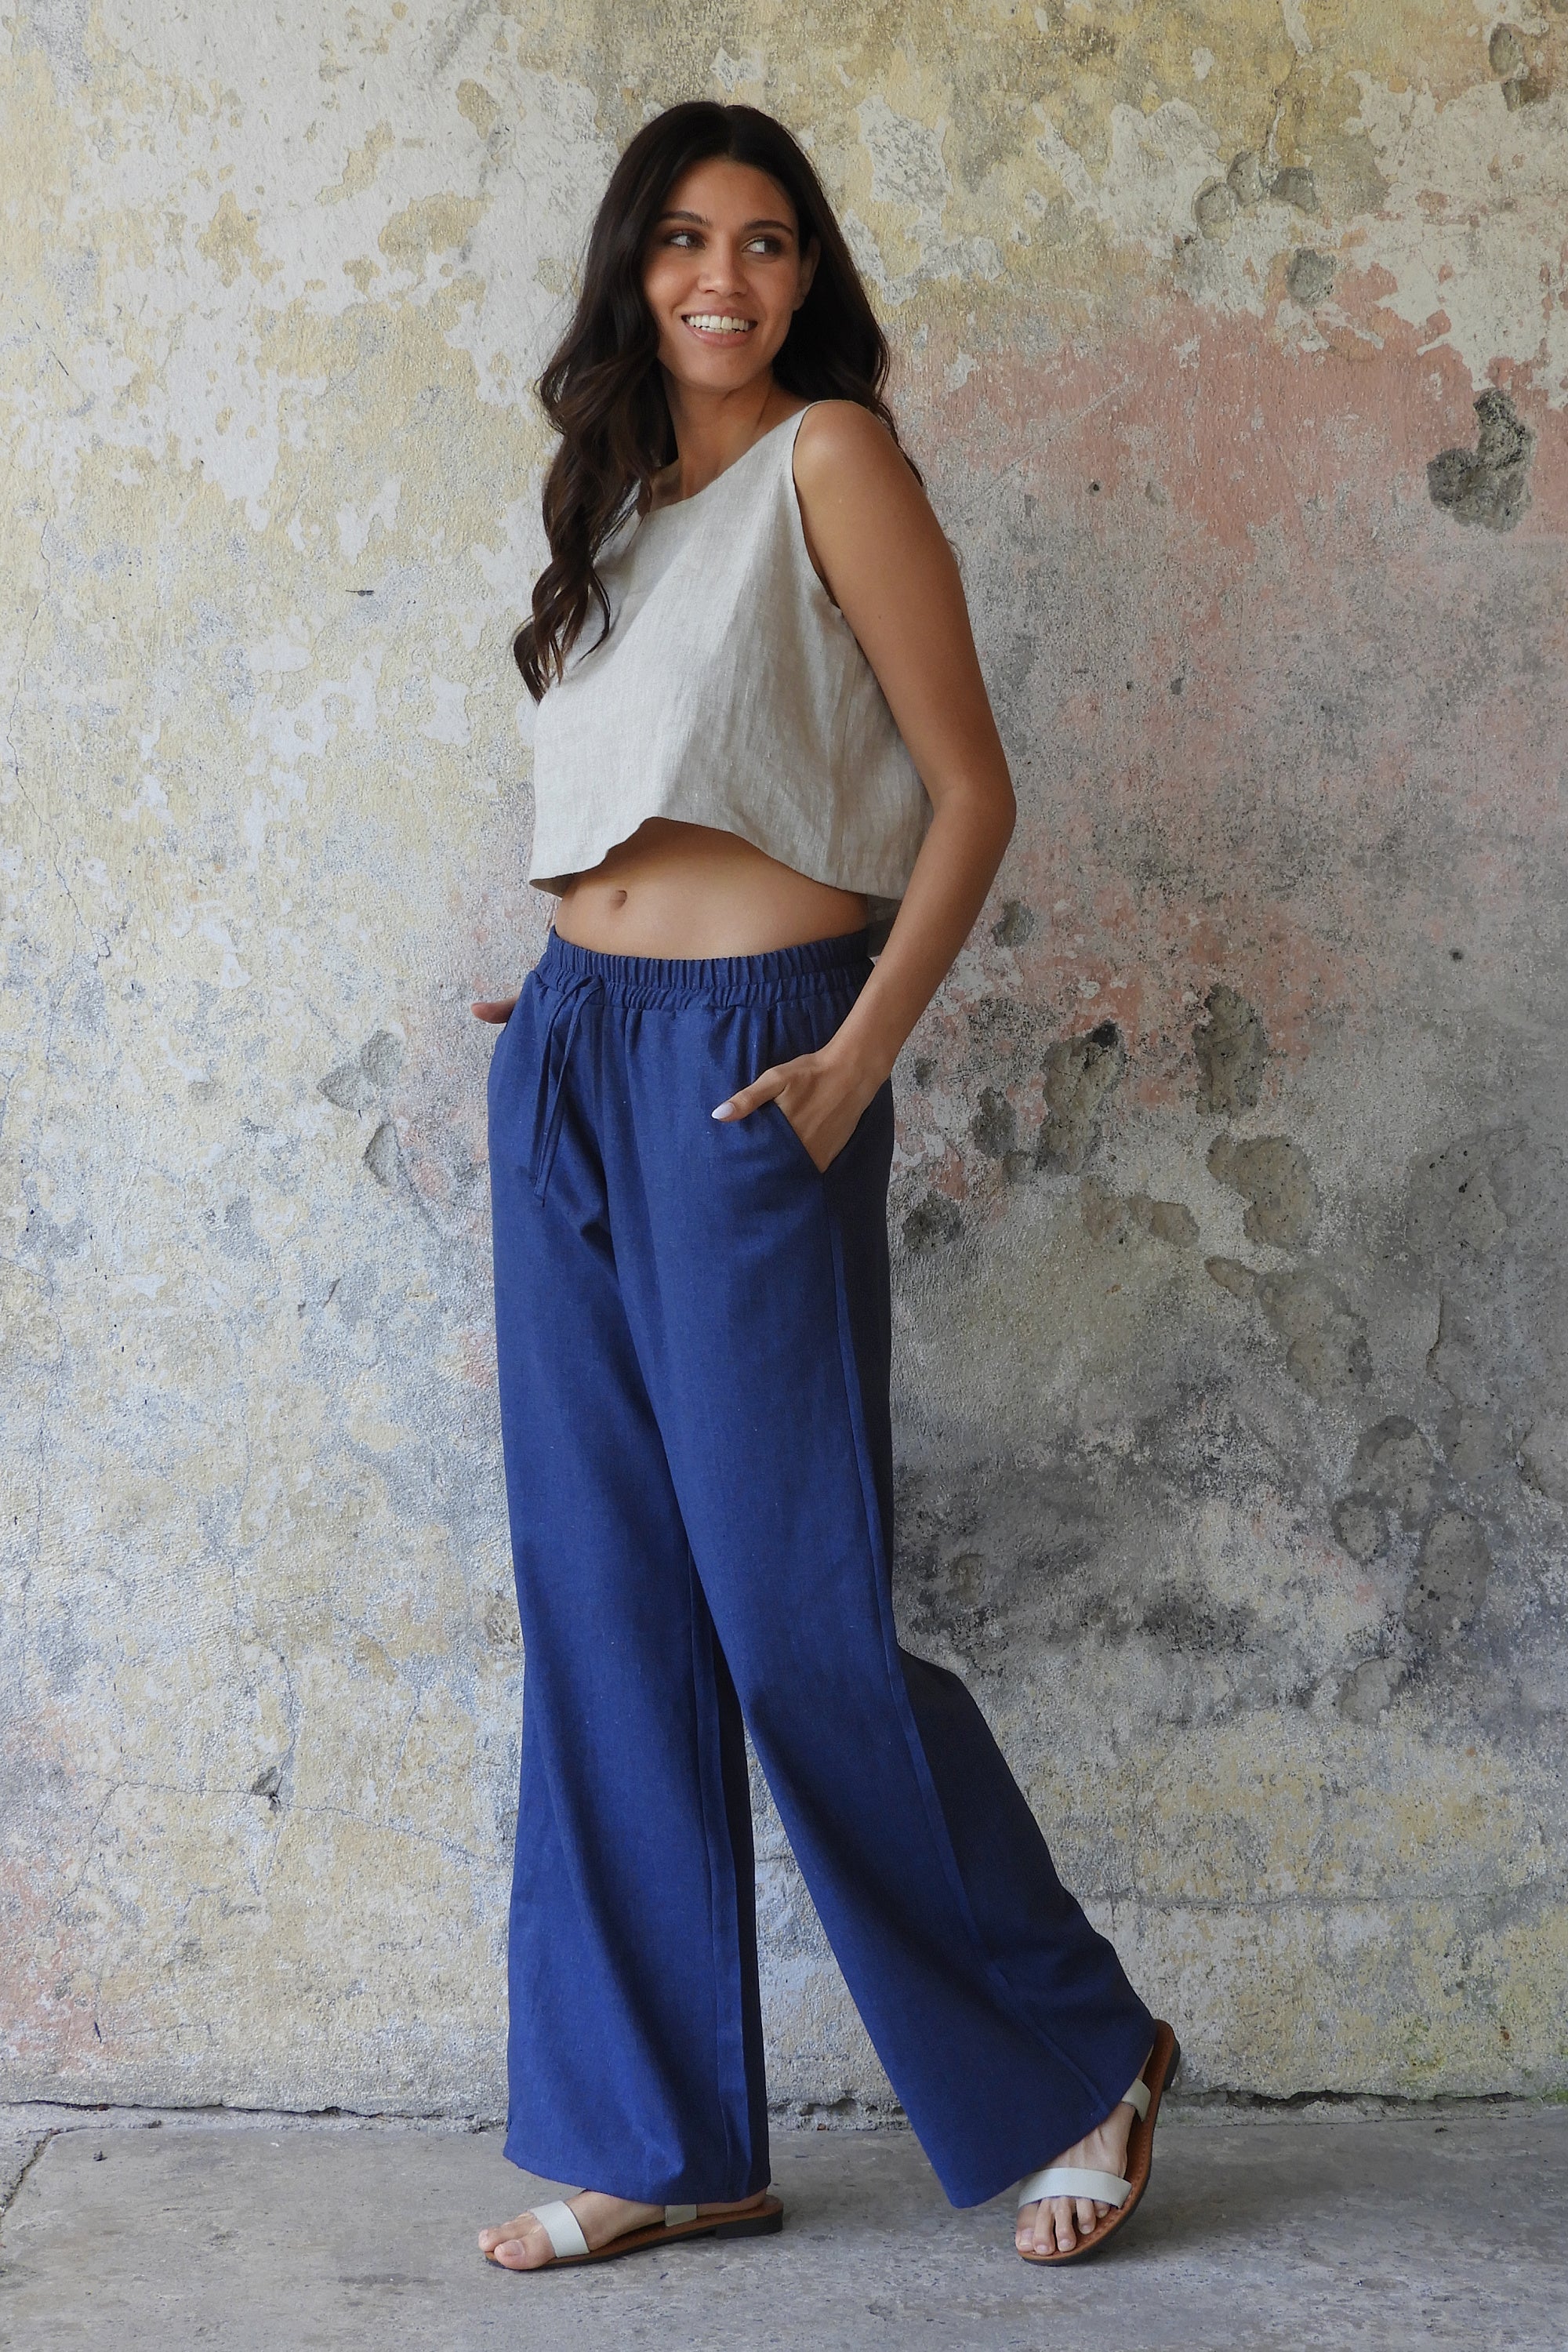 Sustainable  | TRINITY Linen Blend Women's Pants (Tan, Indigo Blue) by Odana's